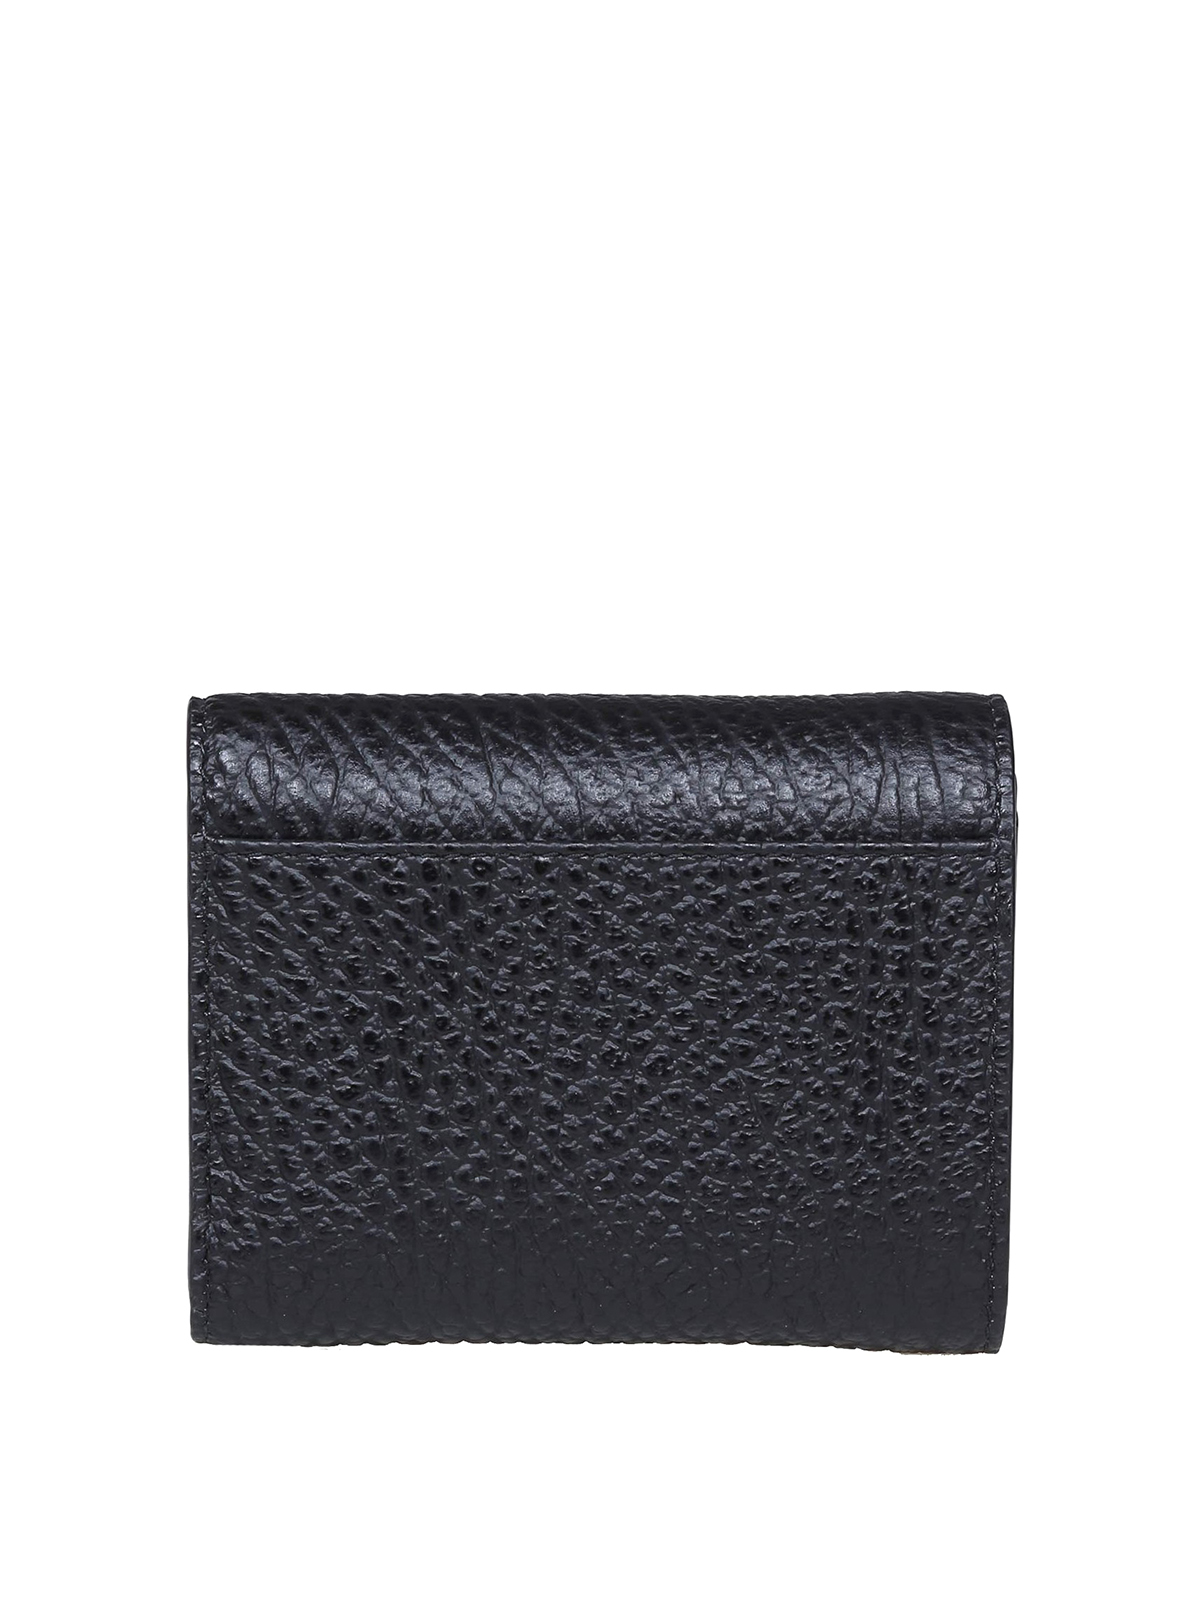 Wallets & purses Maison Margiela - Black leather wallet ...